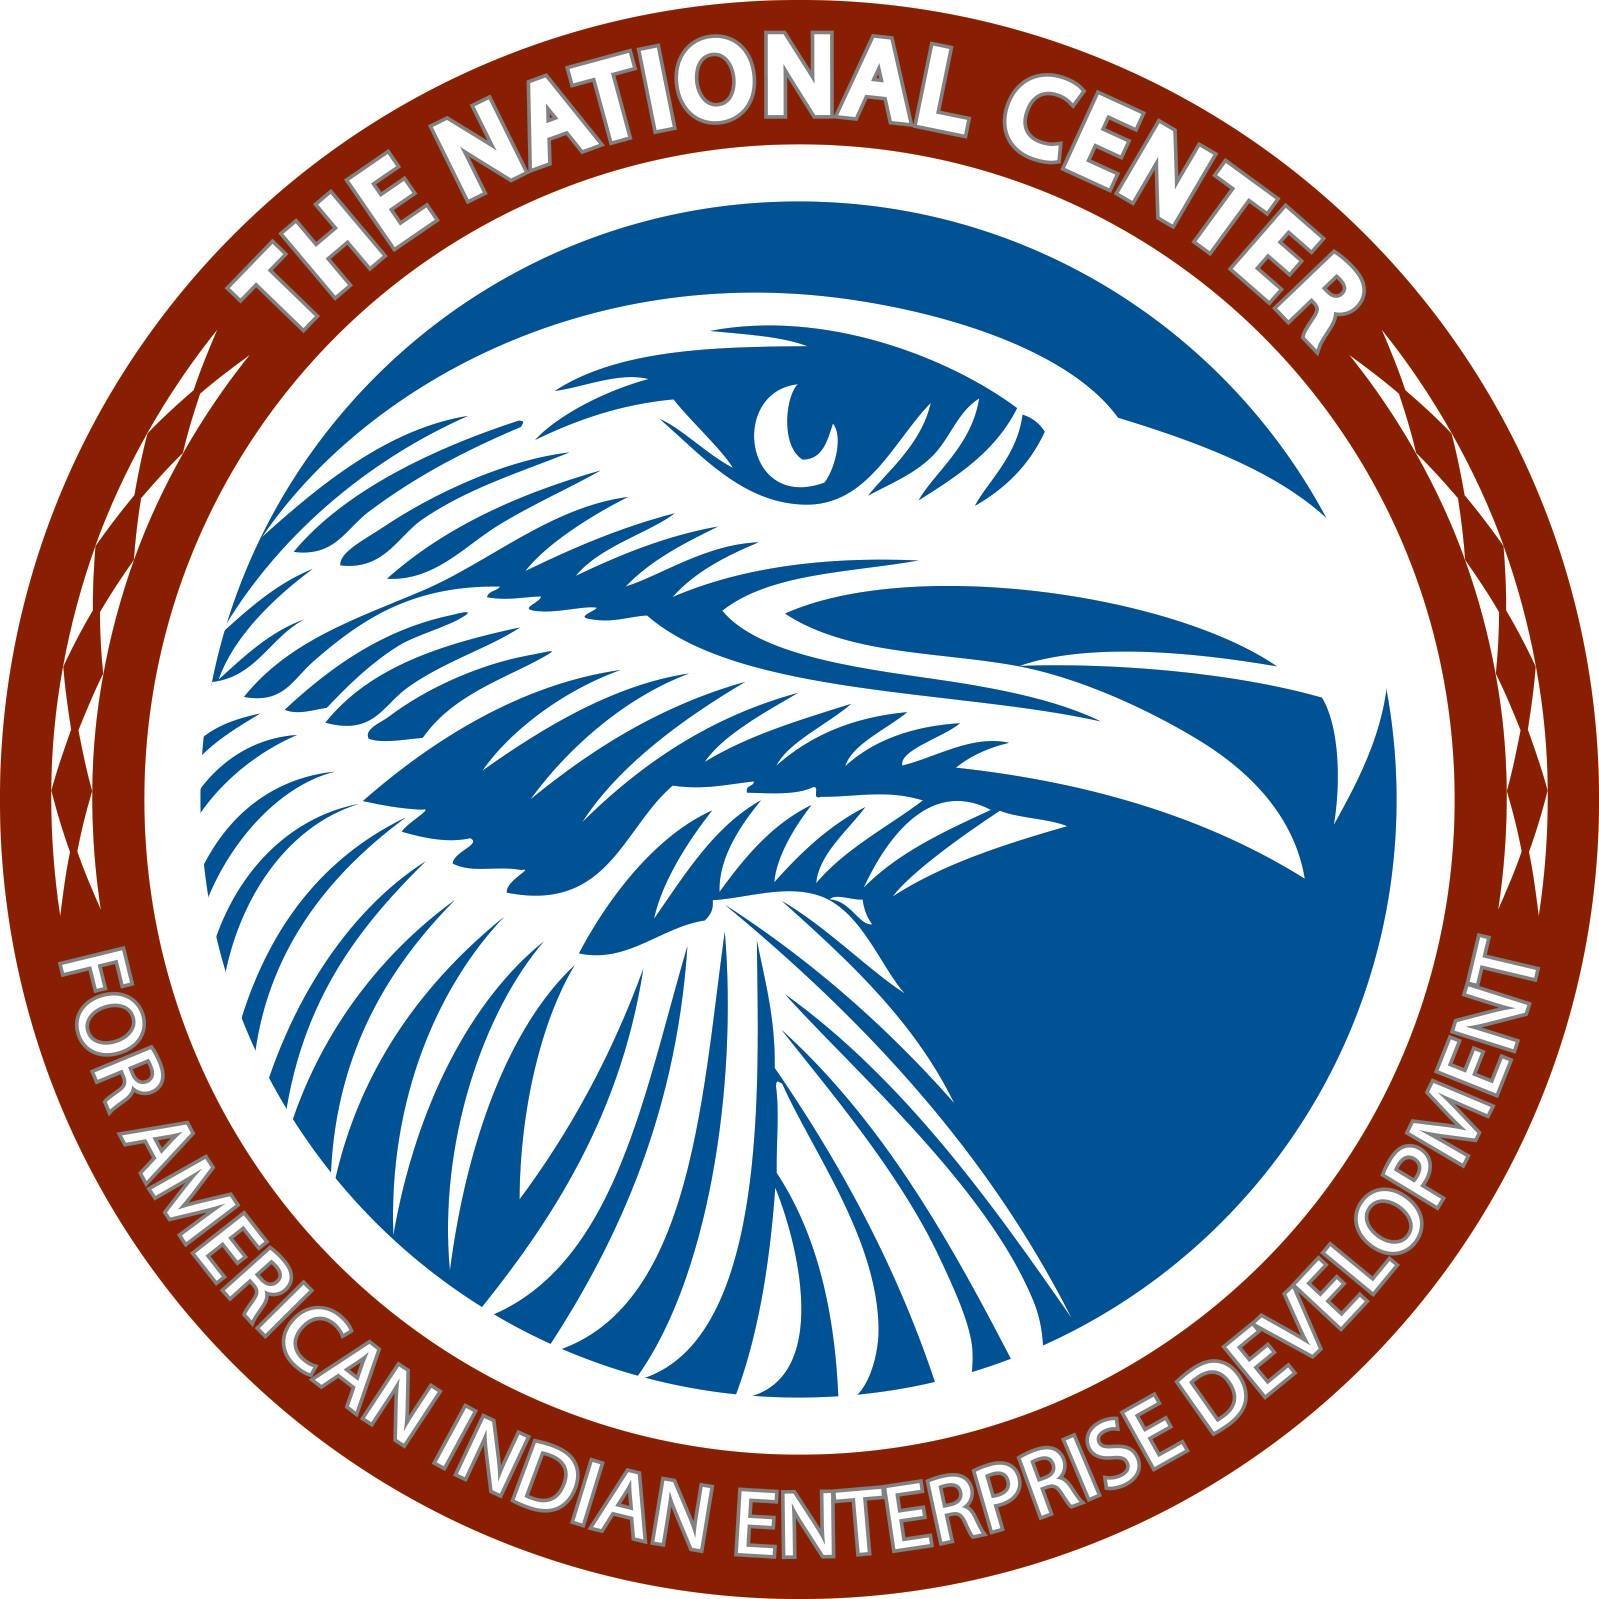 Native American Organization in Arizona - National Center for American Indian Enterprise Development